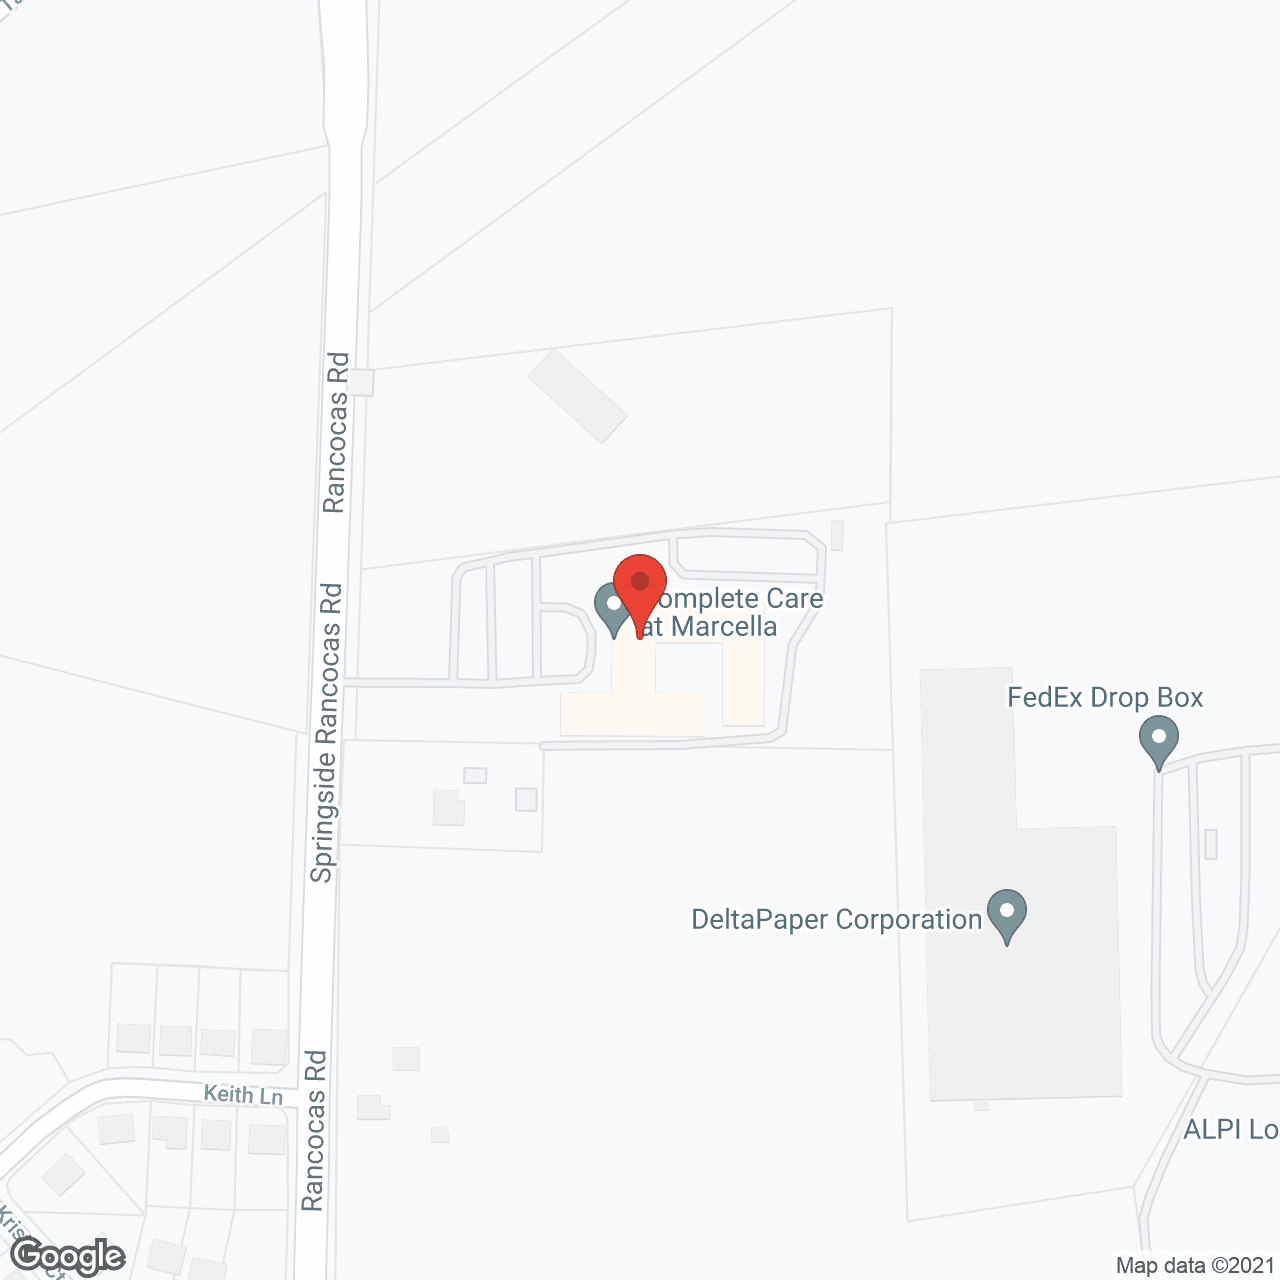 Marcella Center in google map